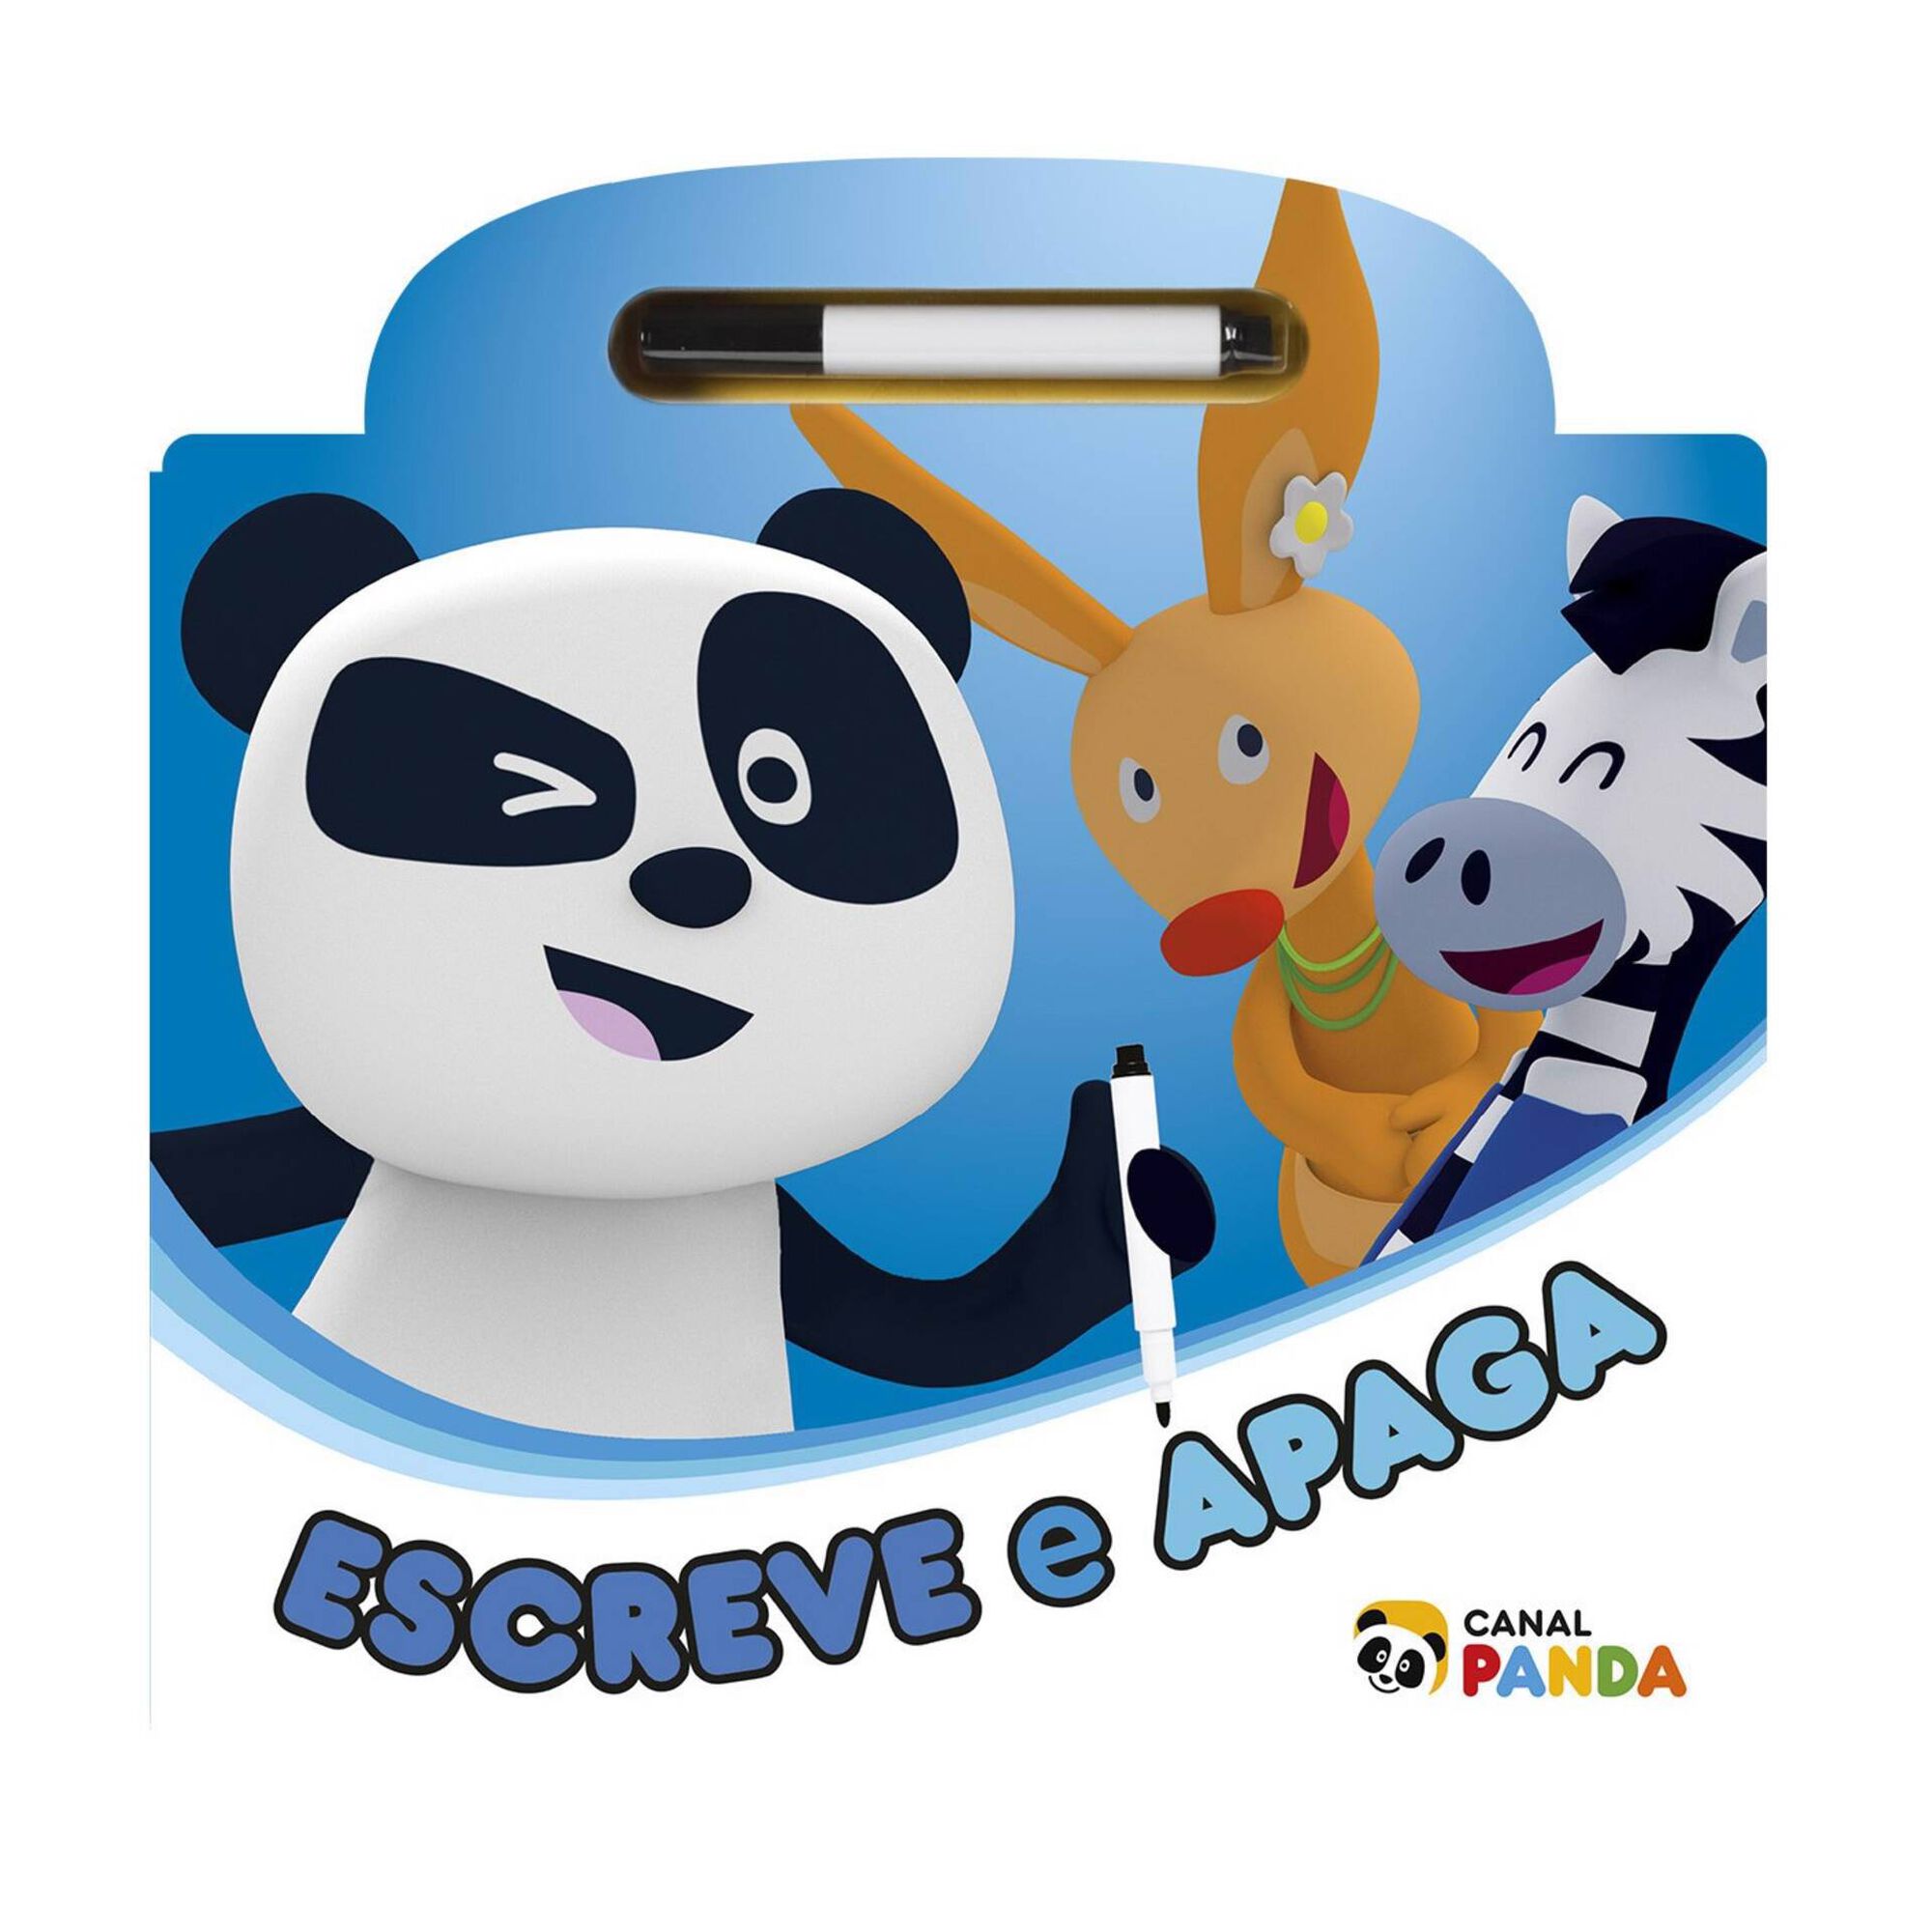 Panda - Escreve e Apaga